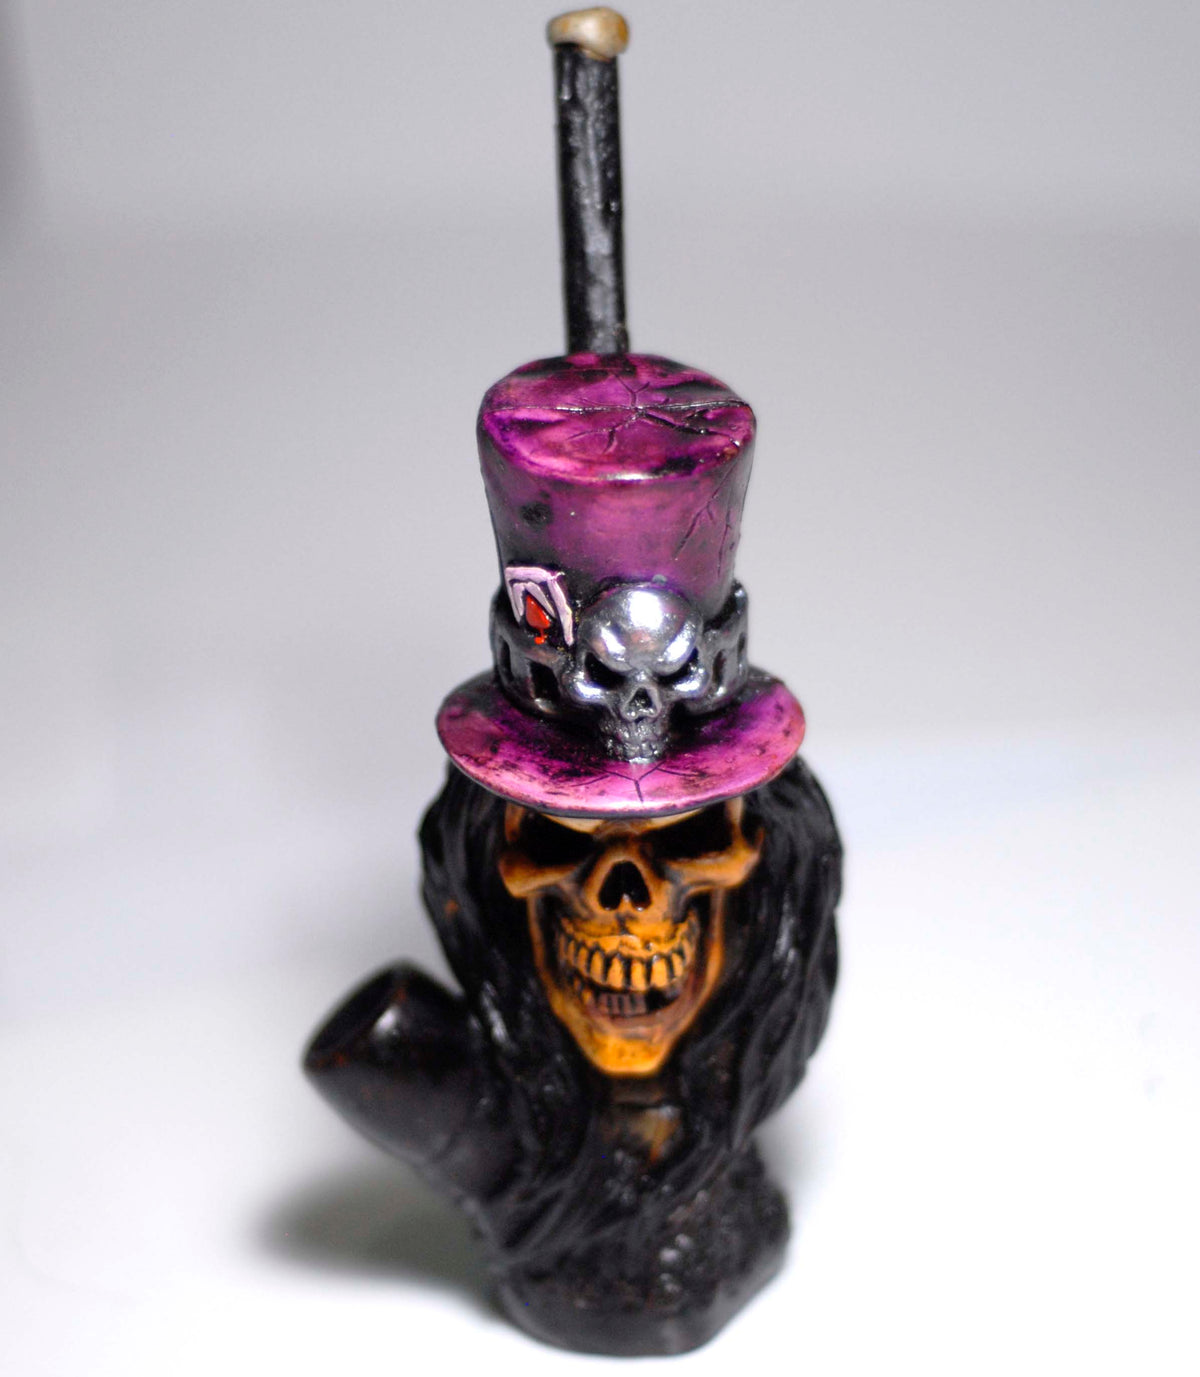 Skull with Purple hat figured handmade ceramic tobacco pipe